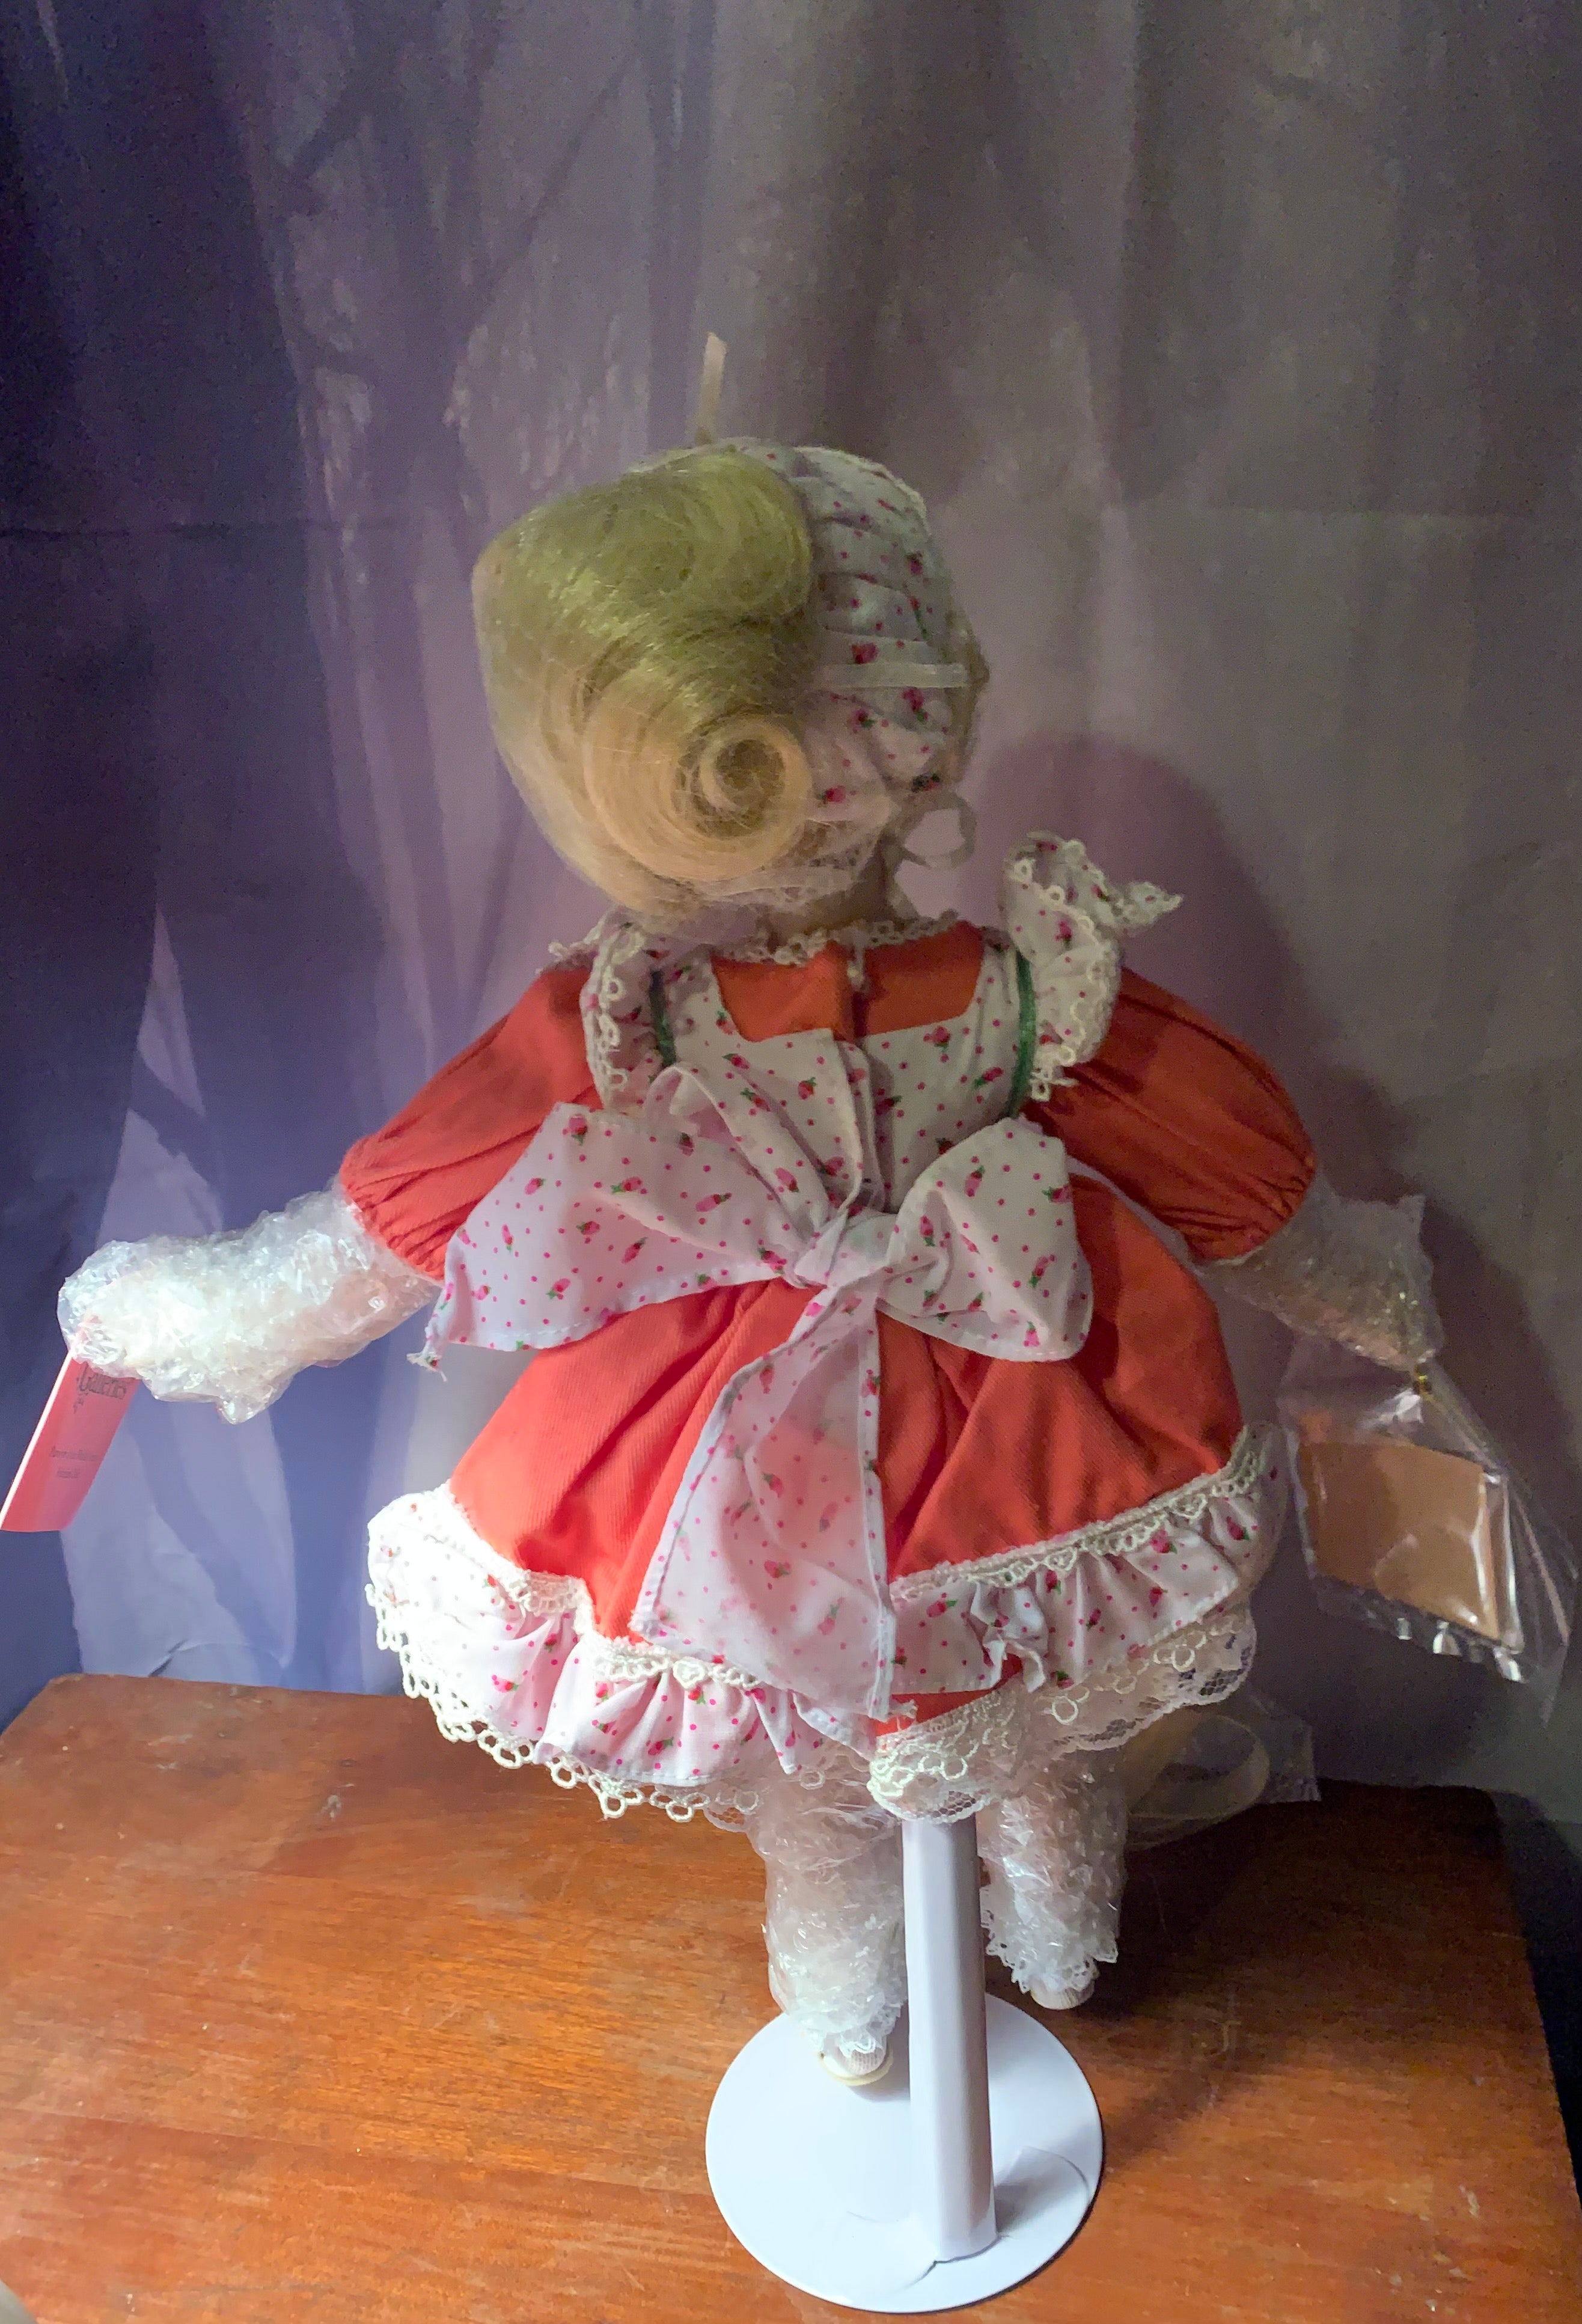 Marcie - Haunted Gray (Light and Dark) Spirit Doll